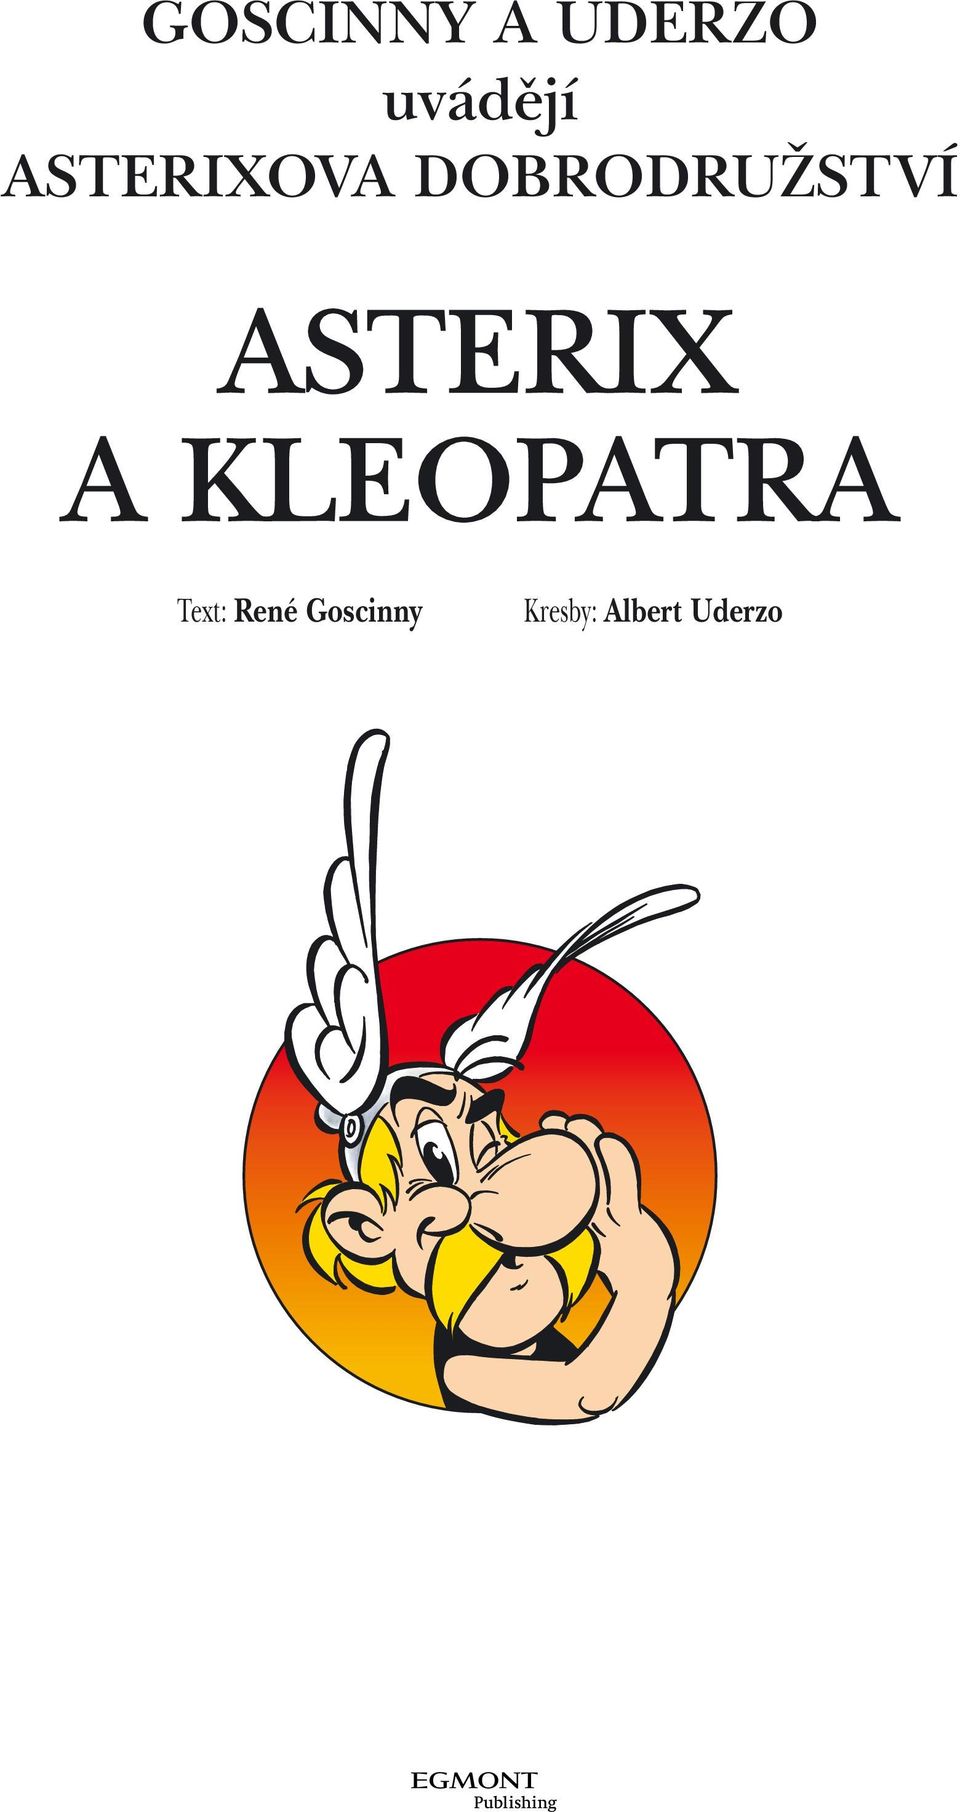 ASTERIX A KLEOPATRA Text: